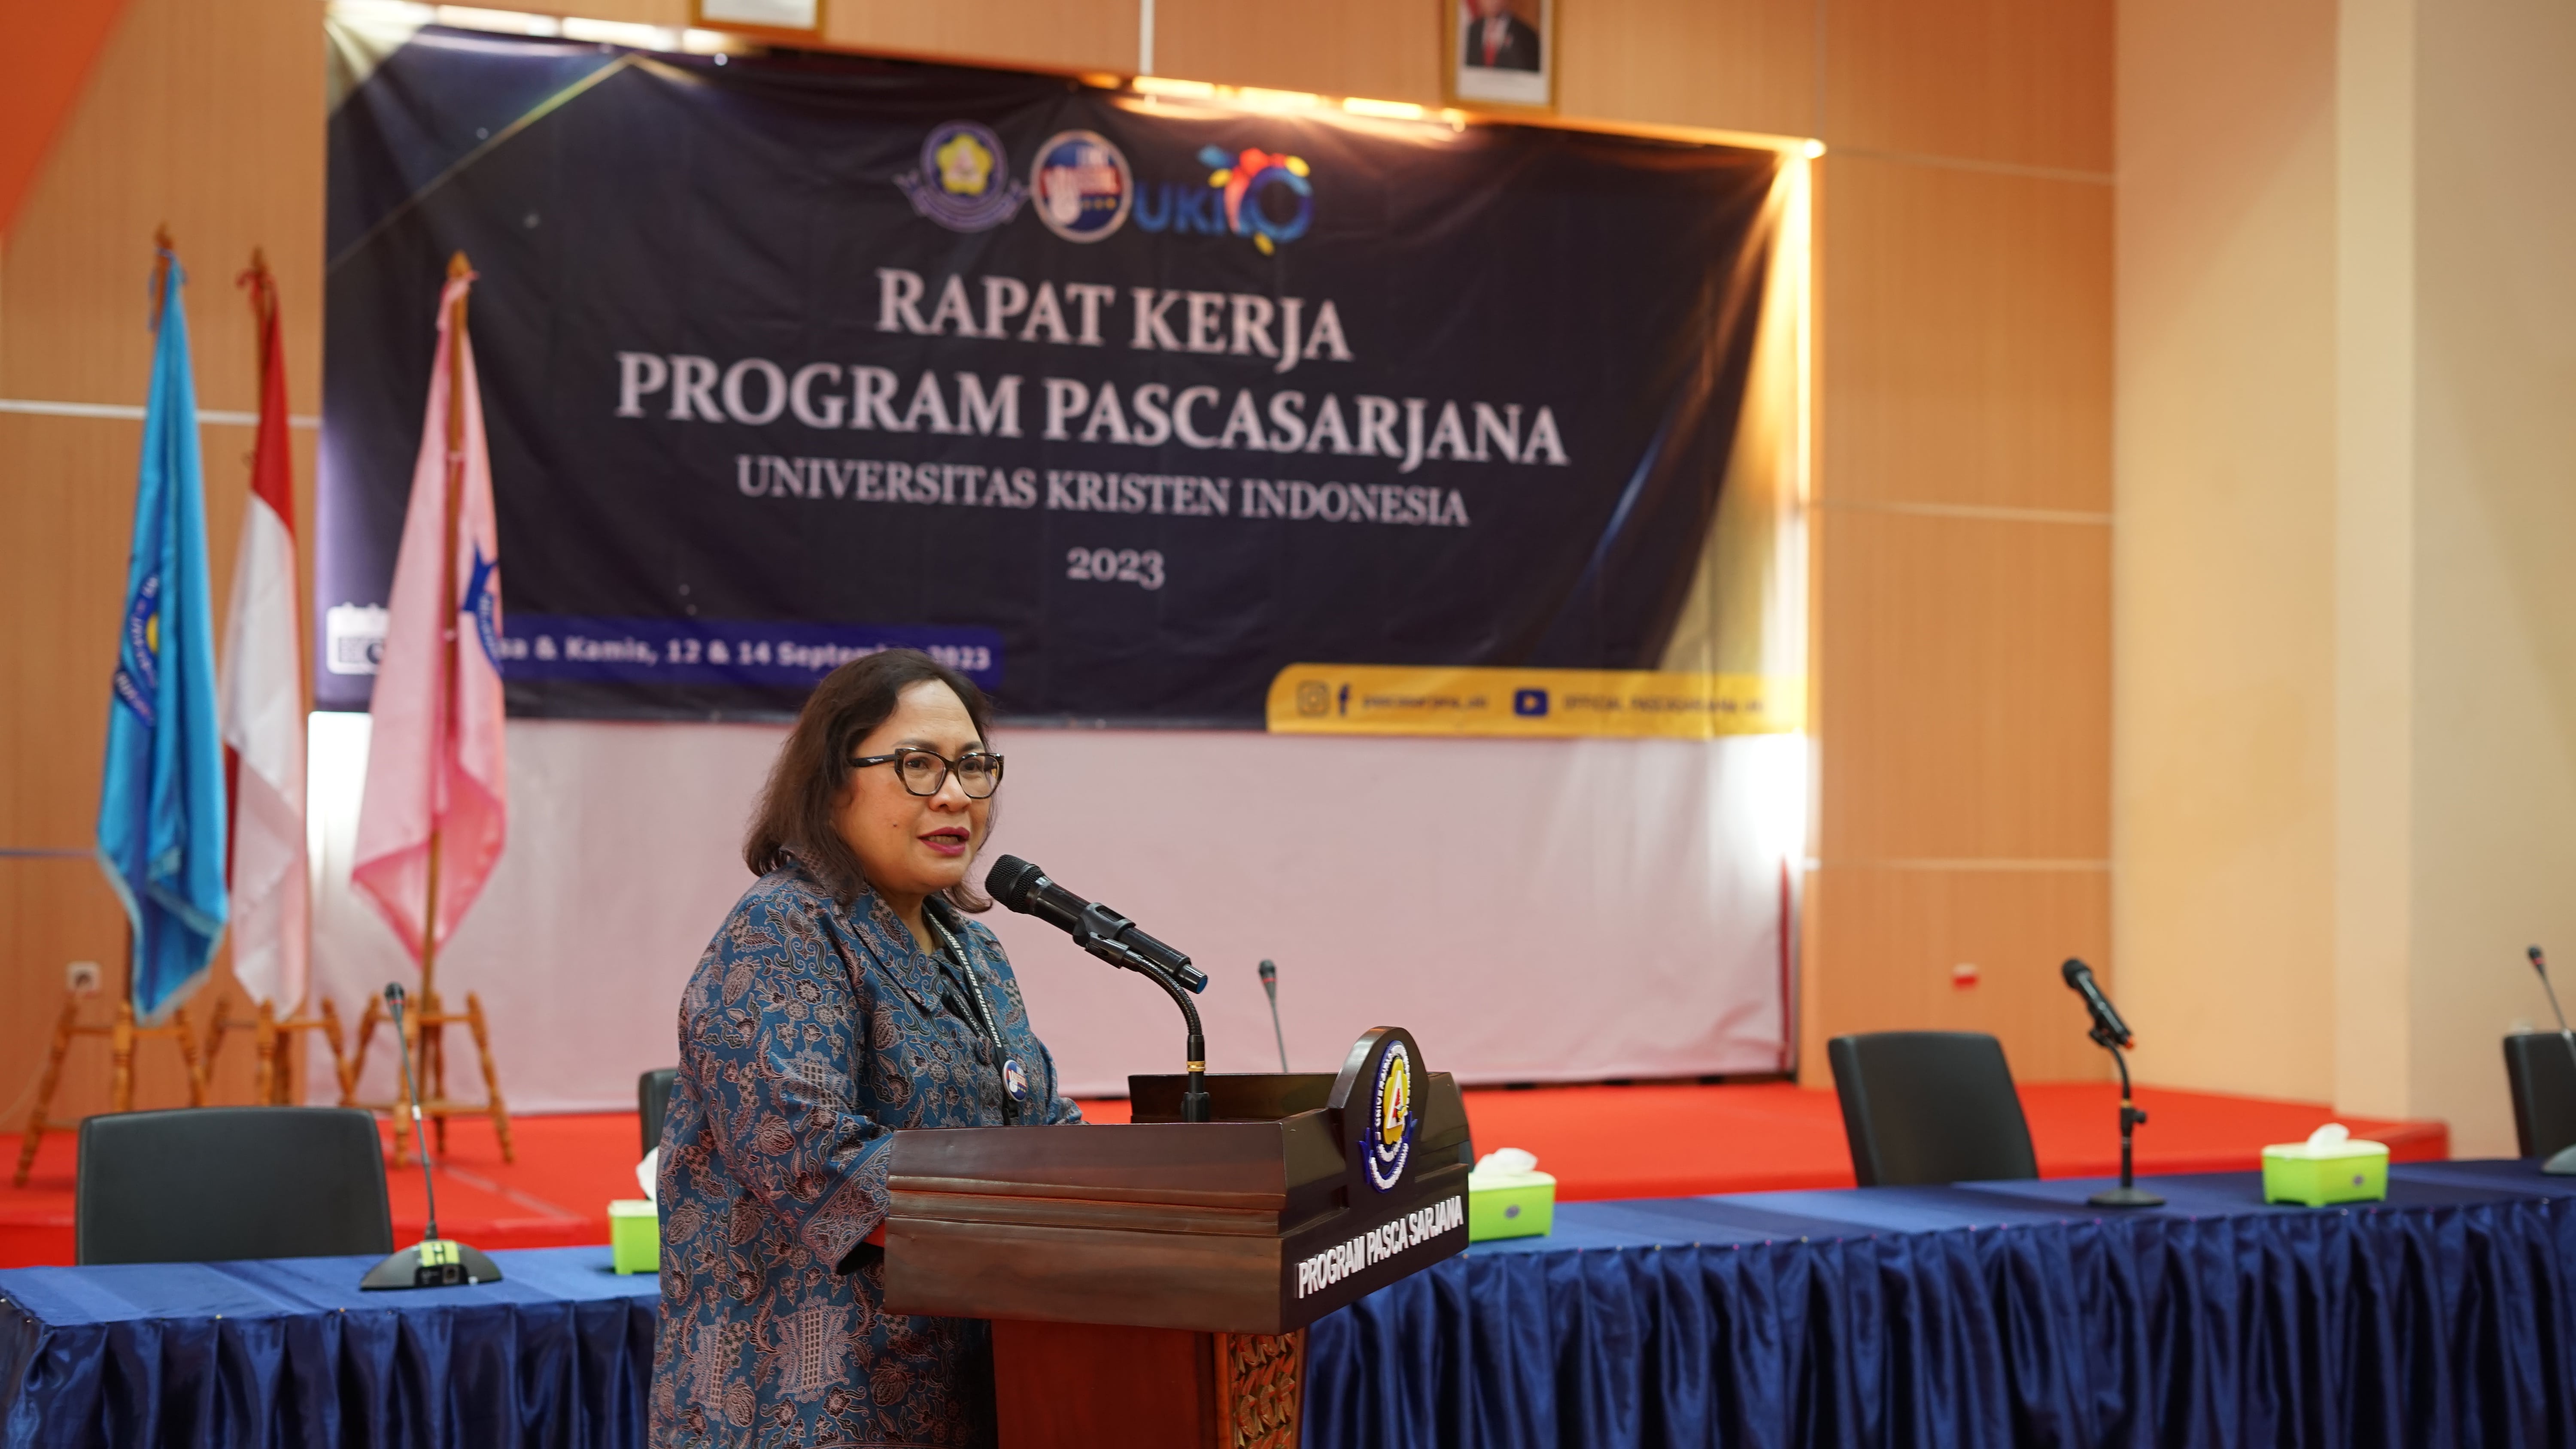 Rapat Kerja Program Pascasarjana Universitas Kristen Indonesia Tahun 2023